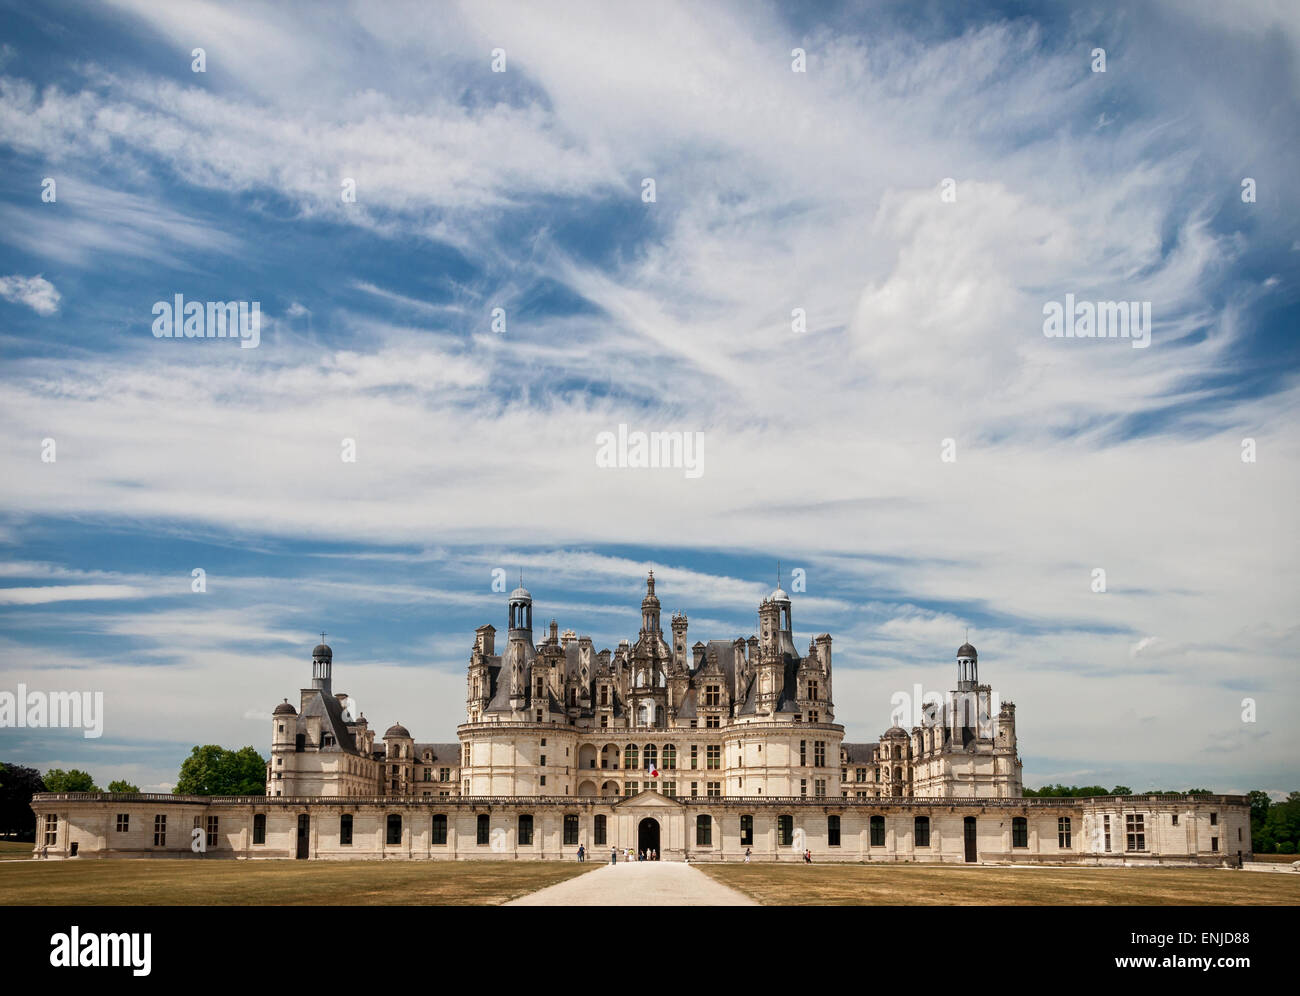 Chateau de Chambord Stock Photo